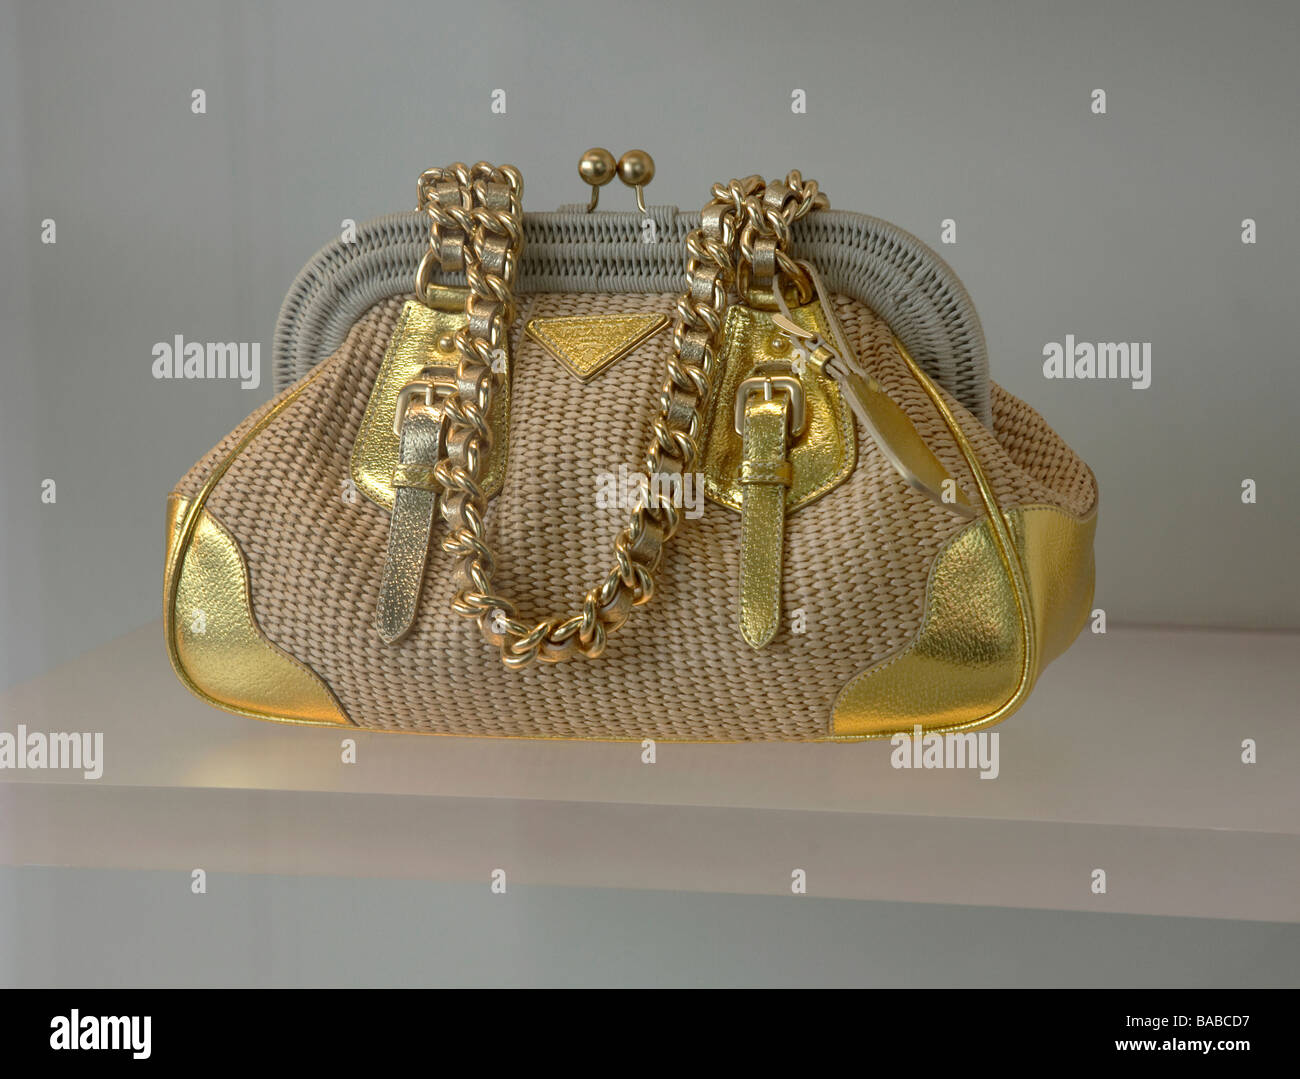 Prada baby bag hi-res stock photography and images - Alamy